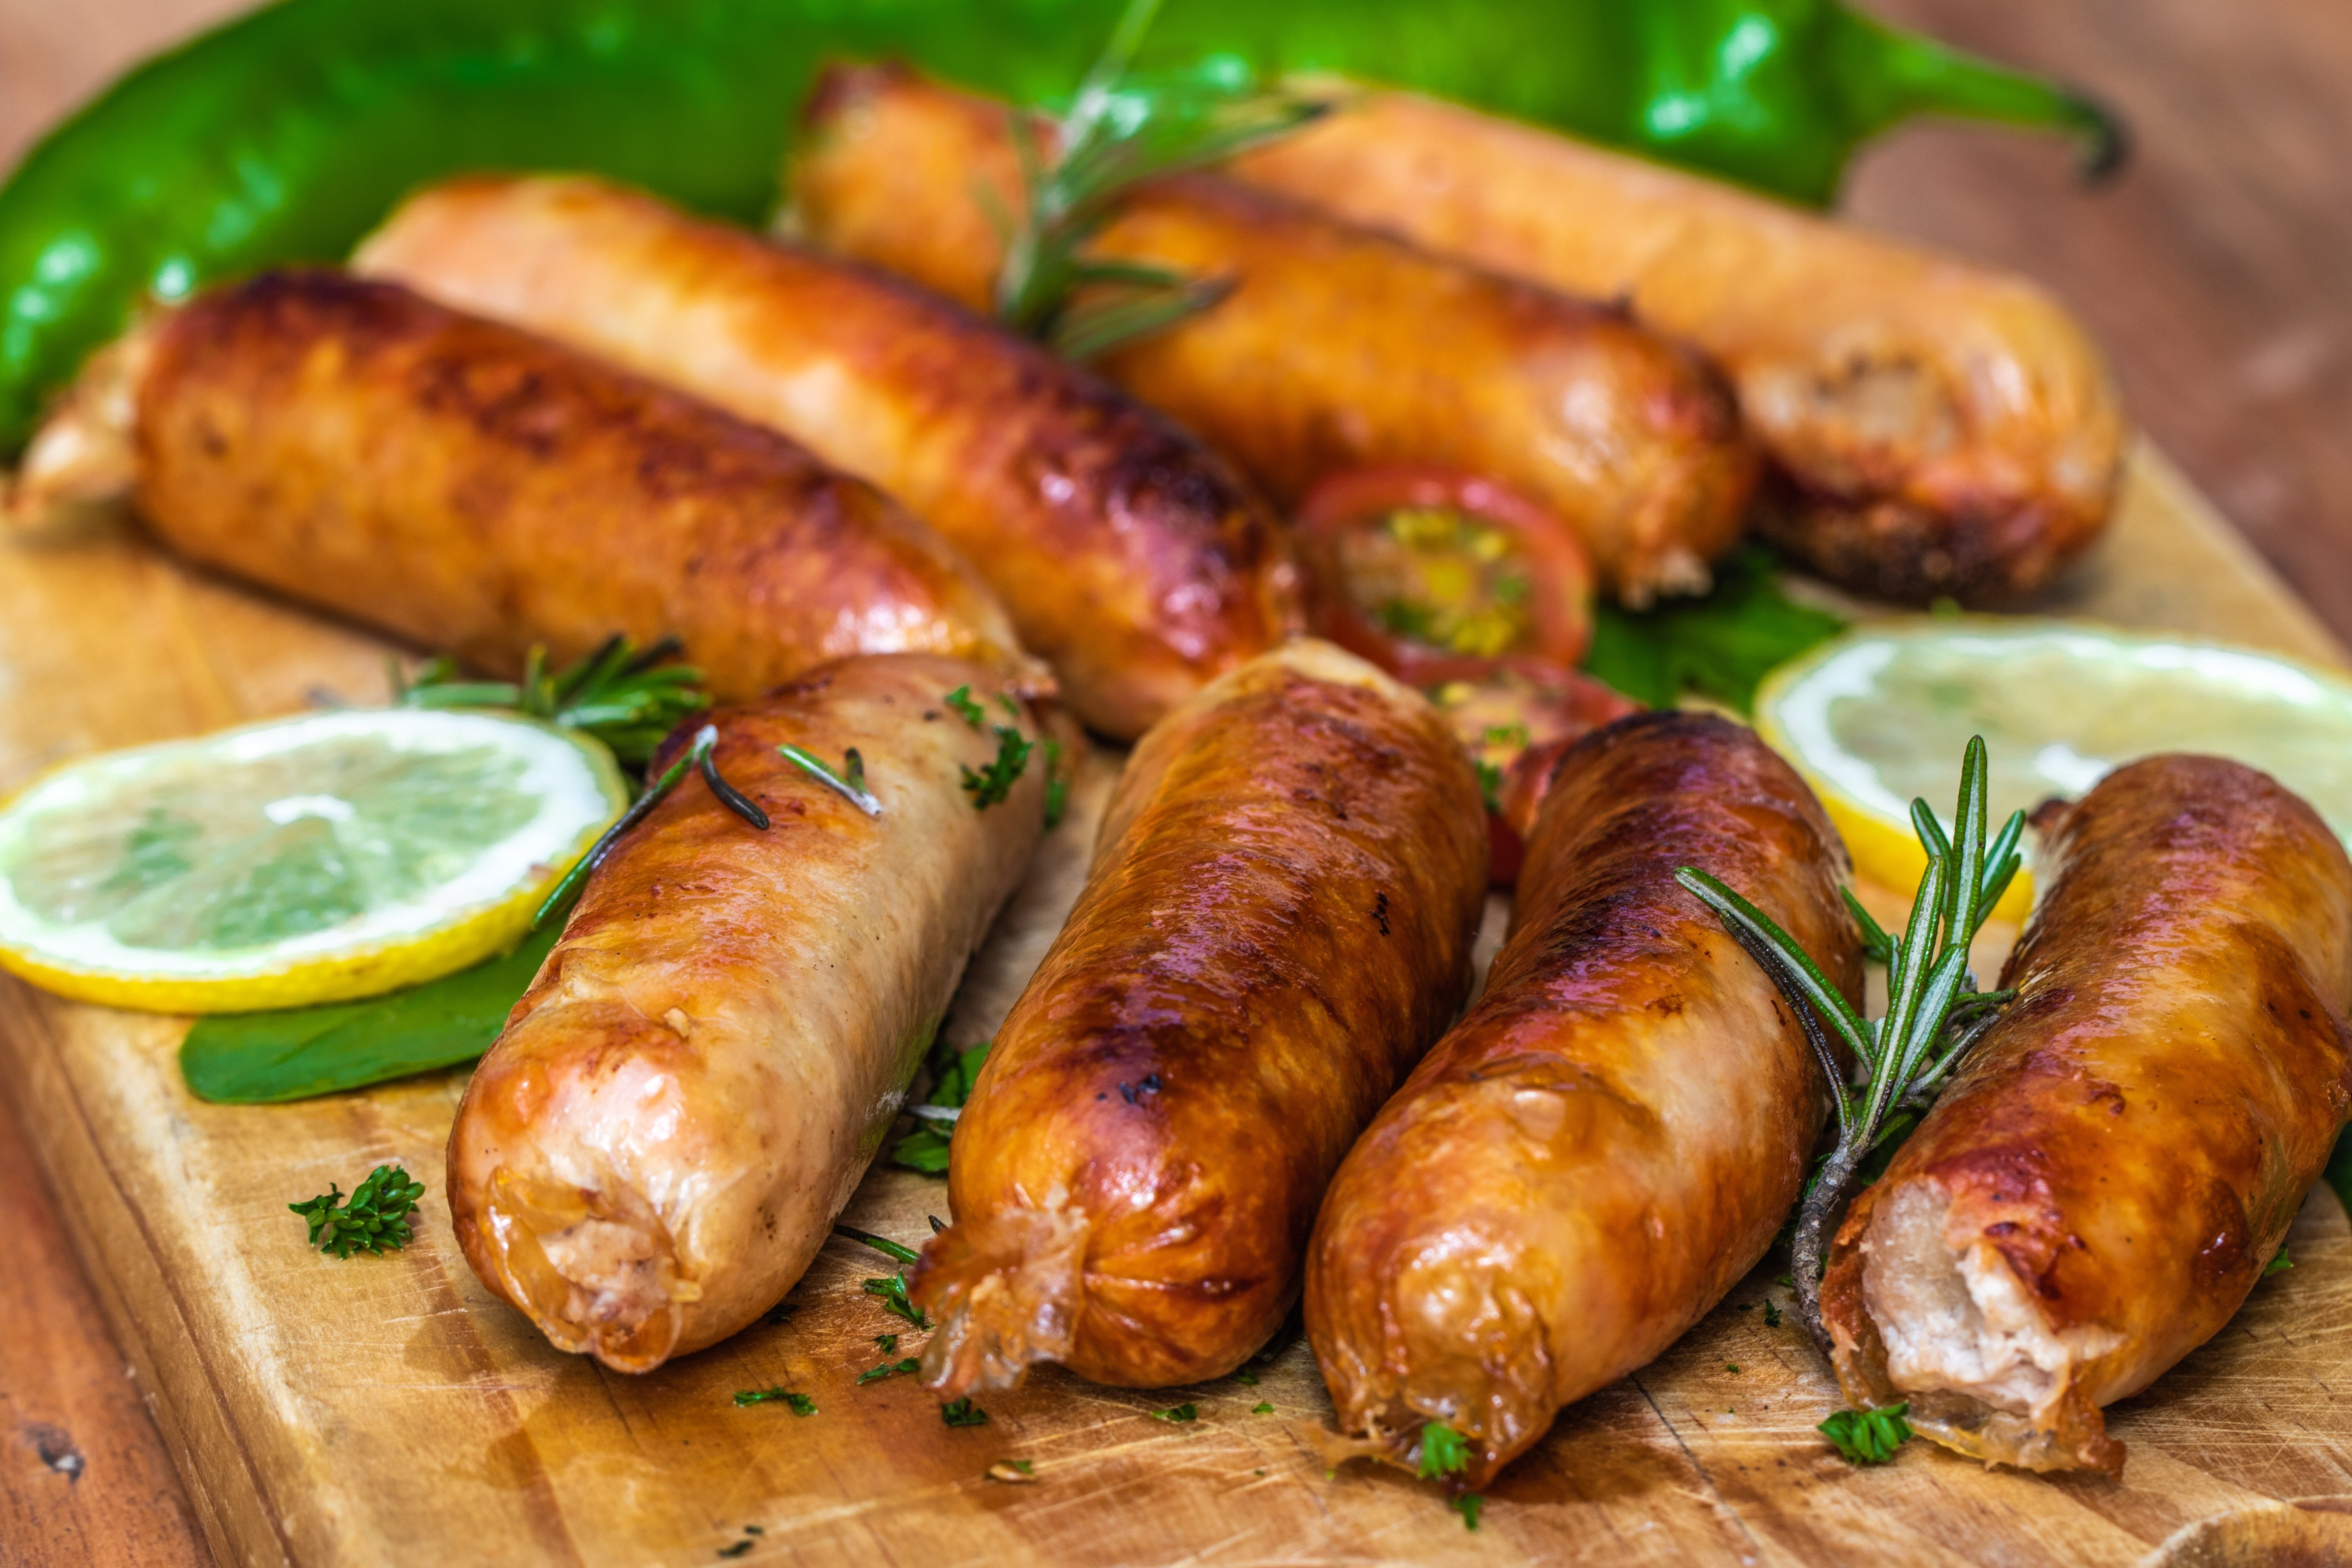 Fried sausages | Source: Pexels